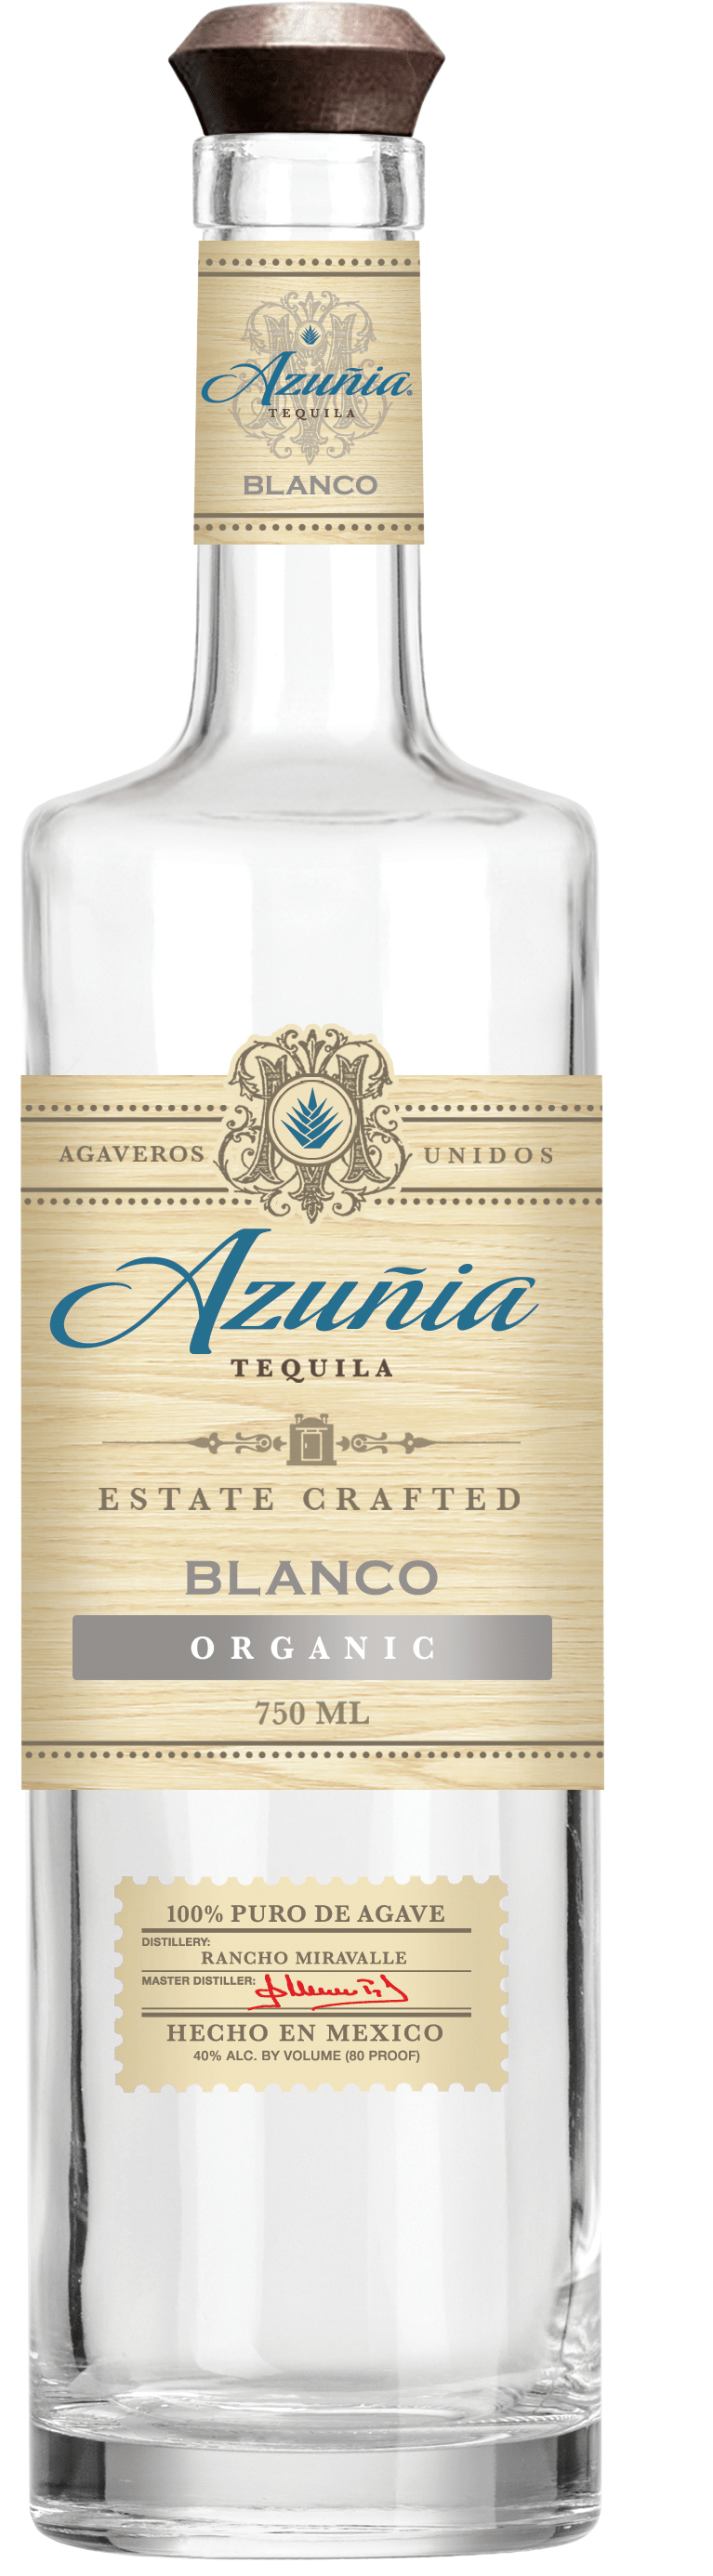 Azunia Blanco Organic Tequila - Barbank